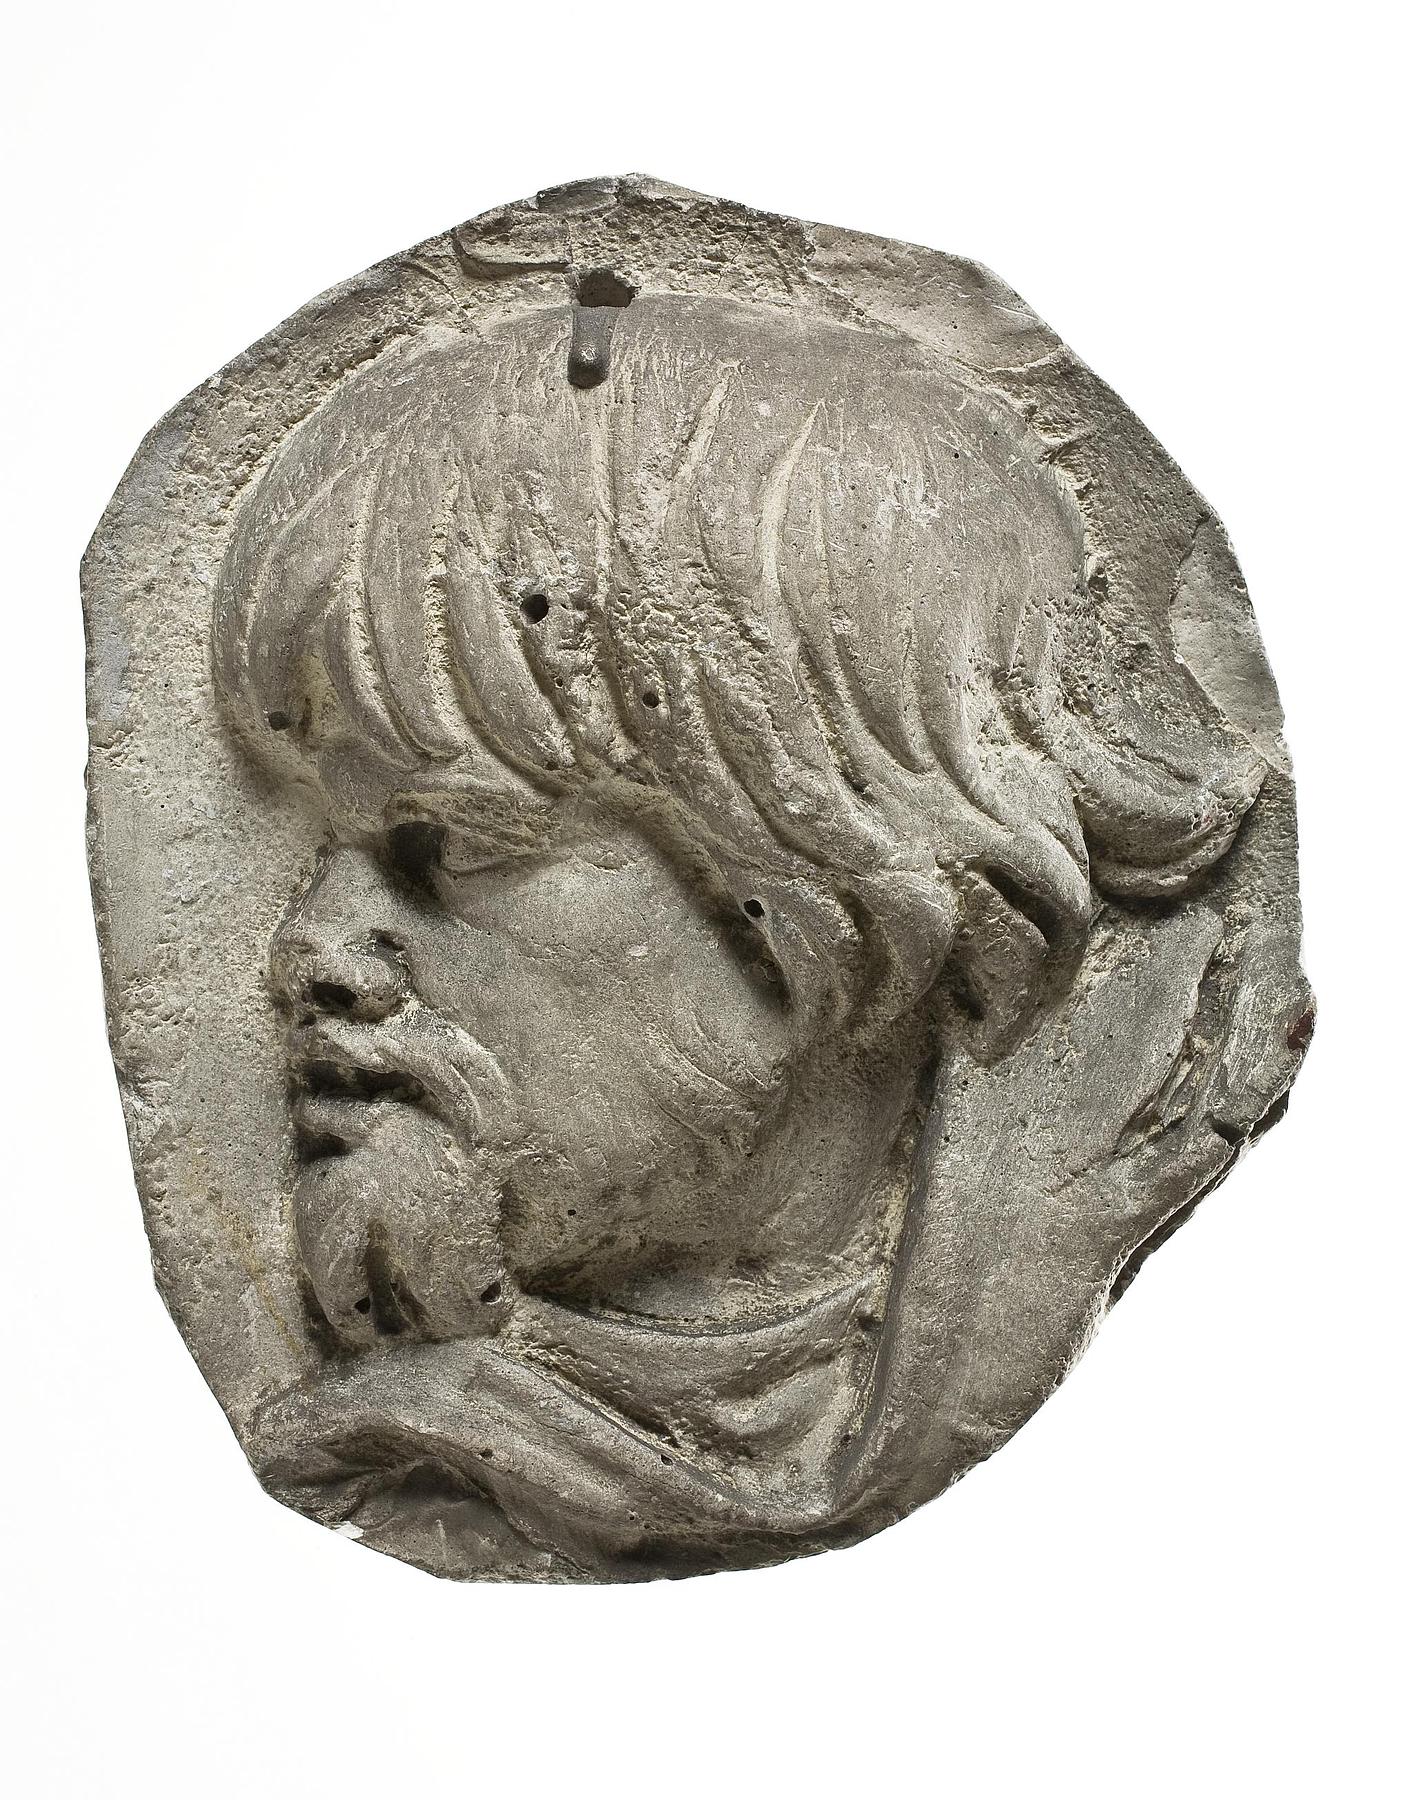 Heads of Dacians, L330bb